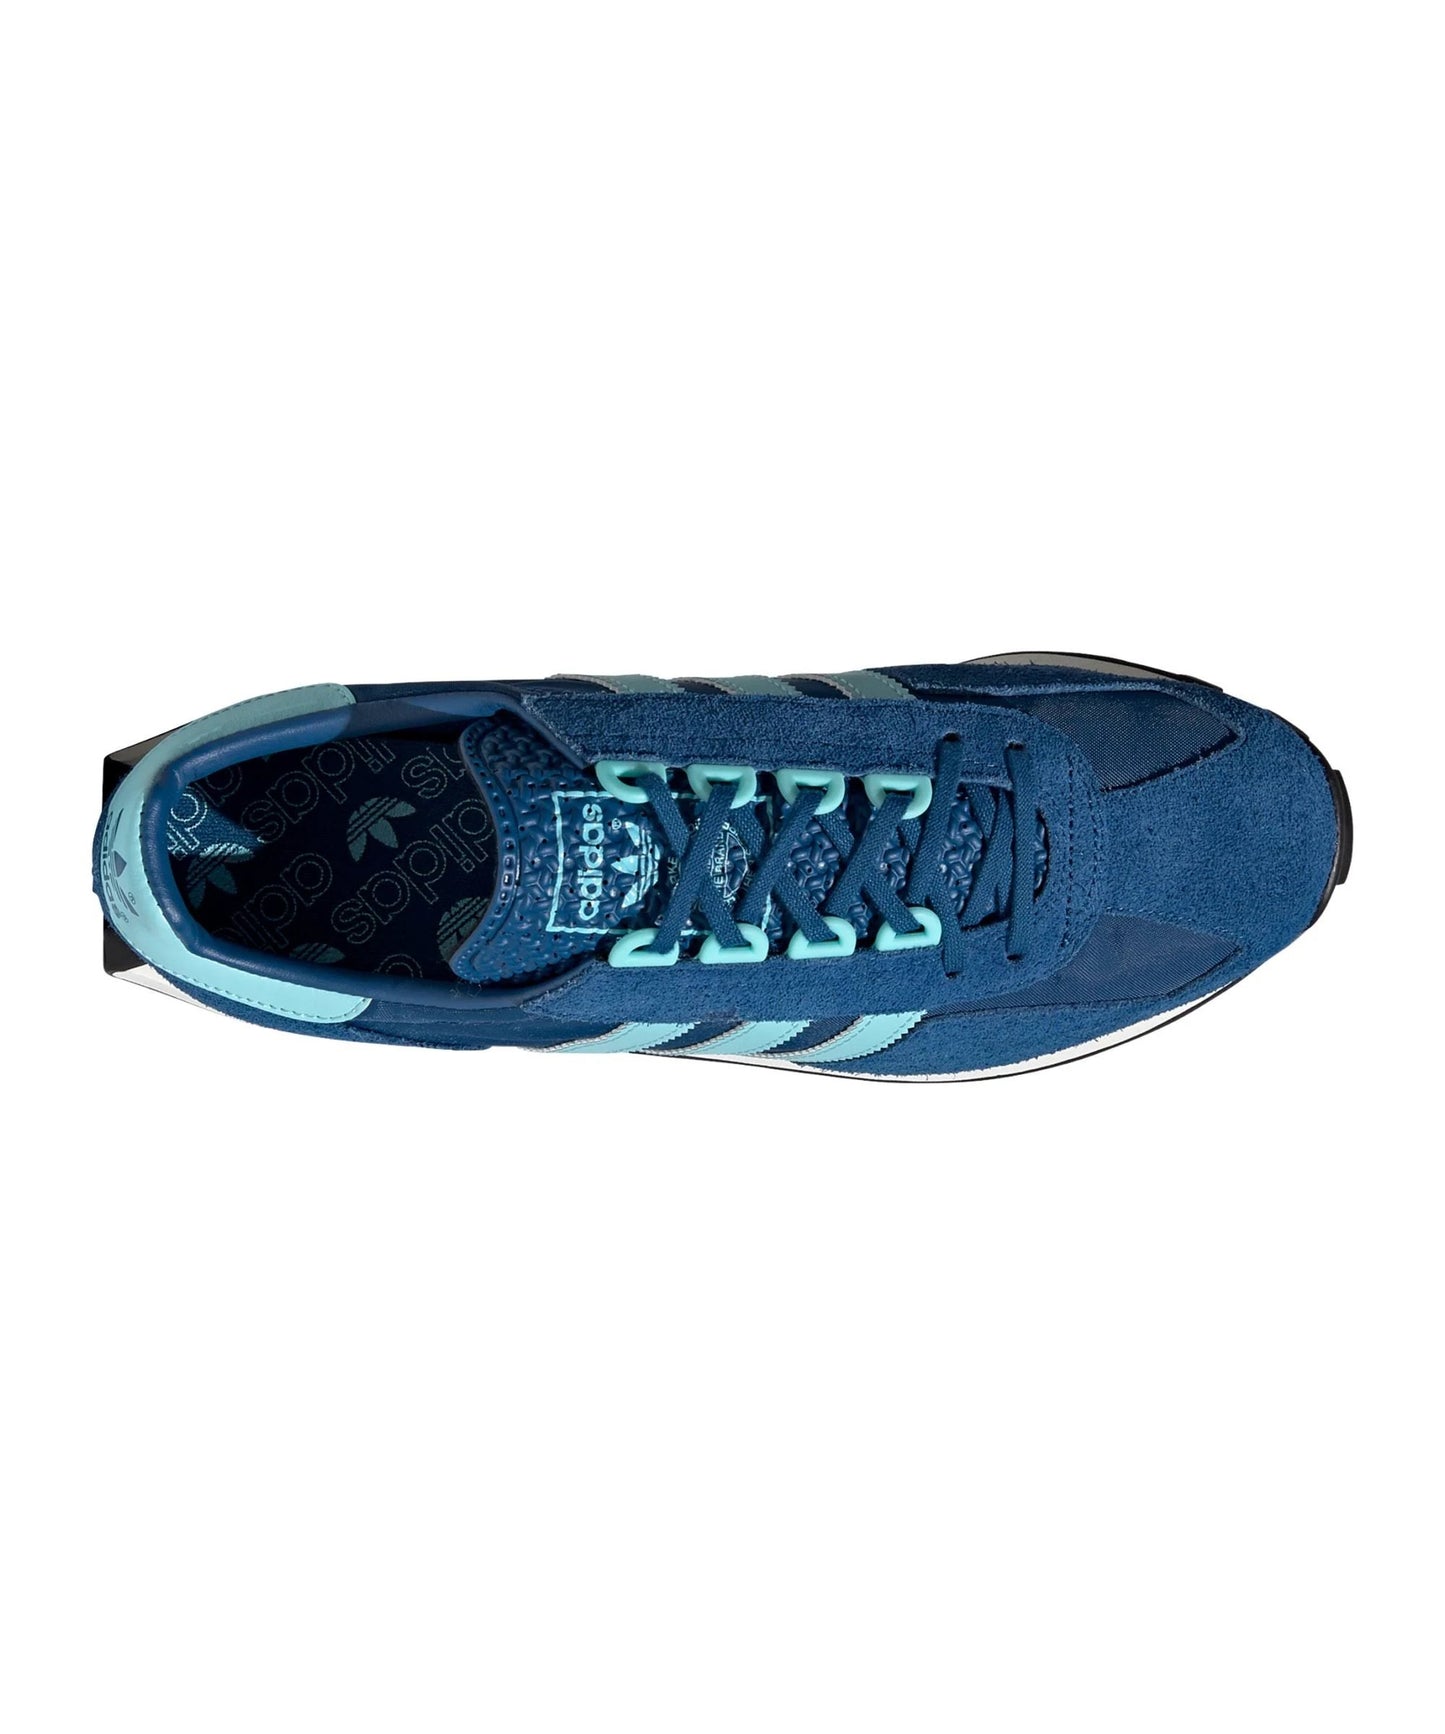 adidas Racing 1 Marine Blue New Men's Retro Sneakers Size 9 H00479 Formel 1 Formula 1